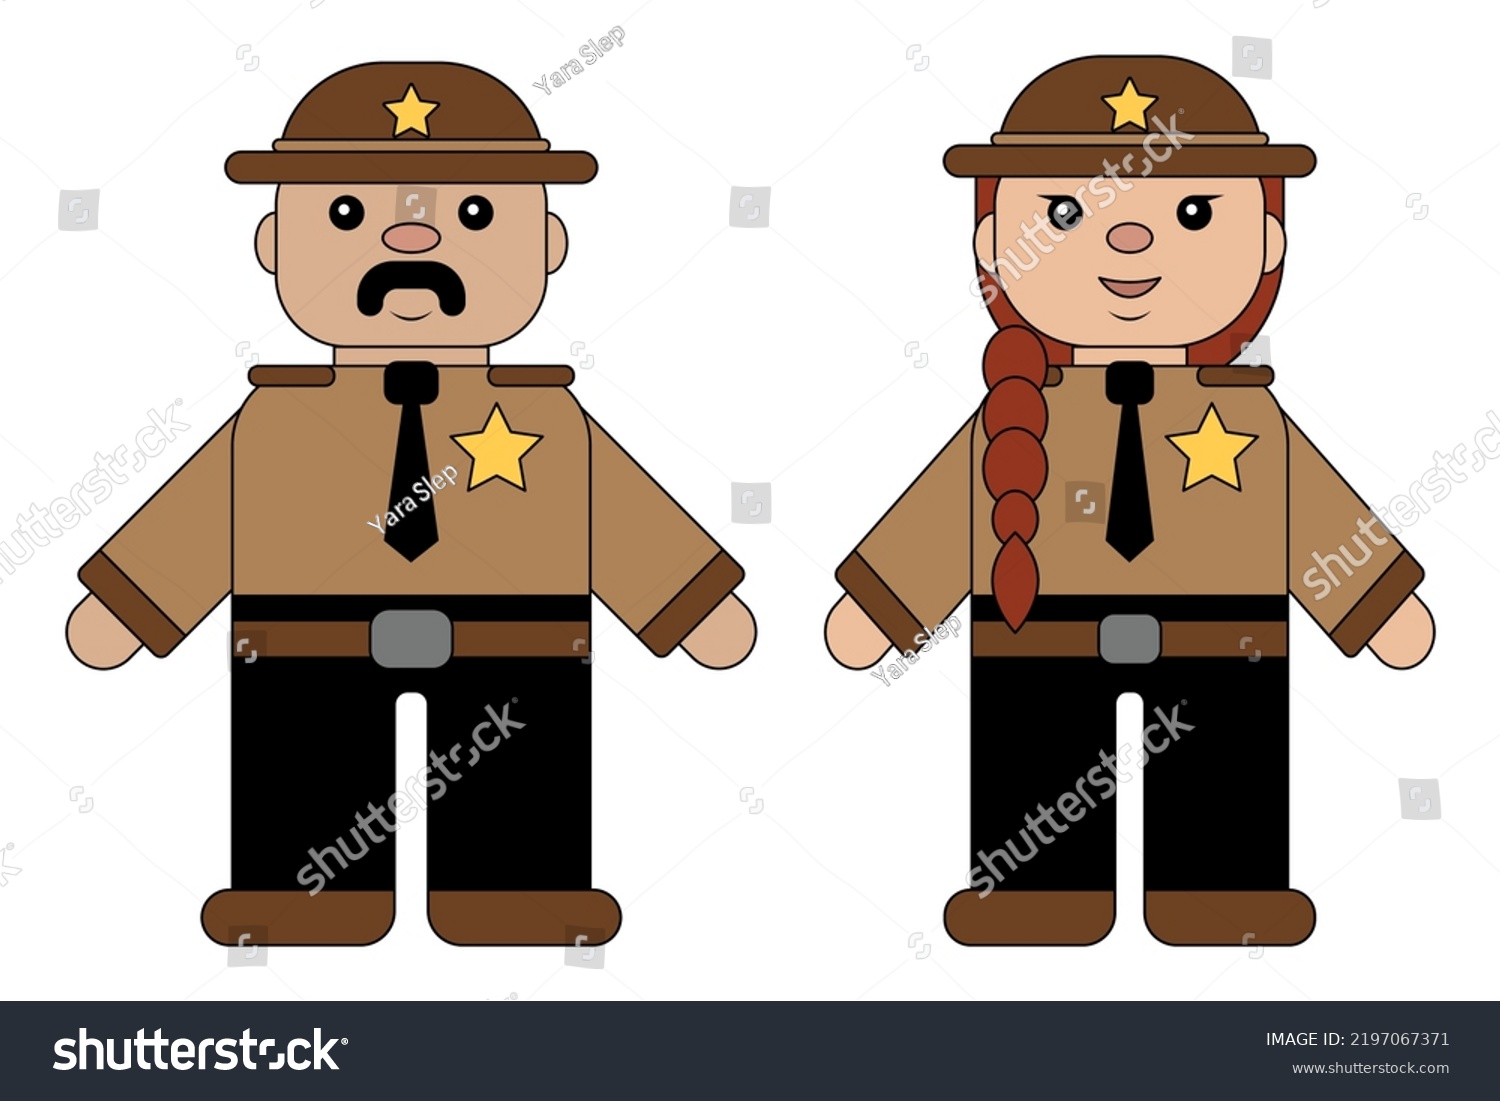 Woman Sheriff Man Sheriff Vector Illustration Stock Vector Royalty Free 2197067371 Shutterstock